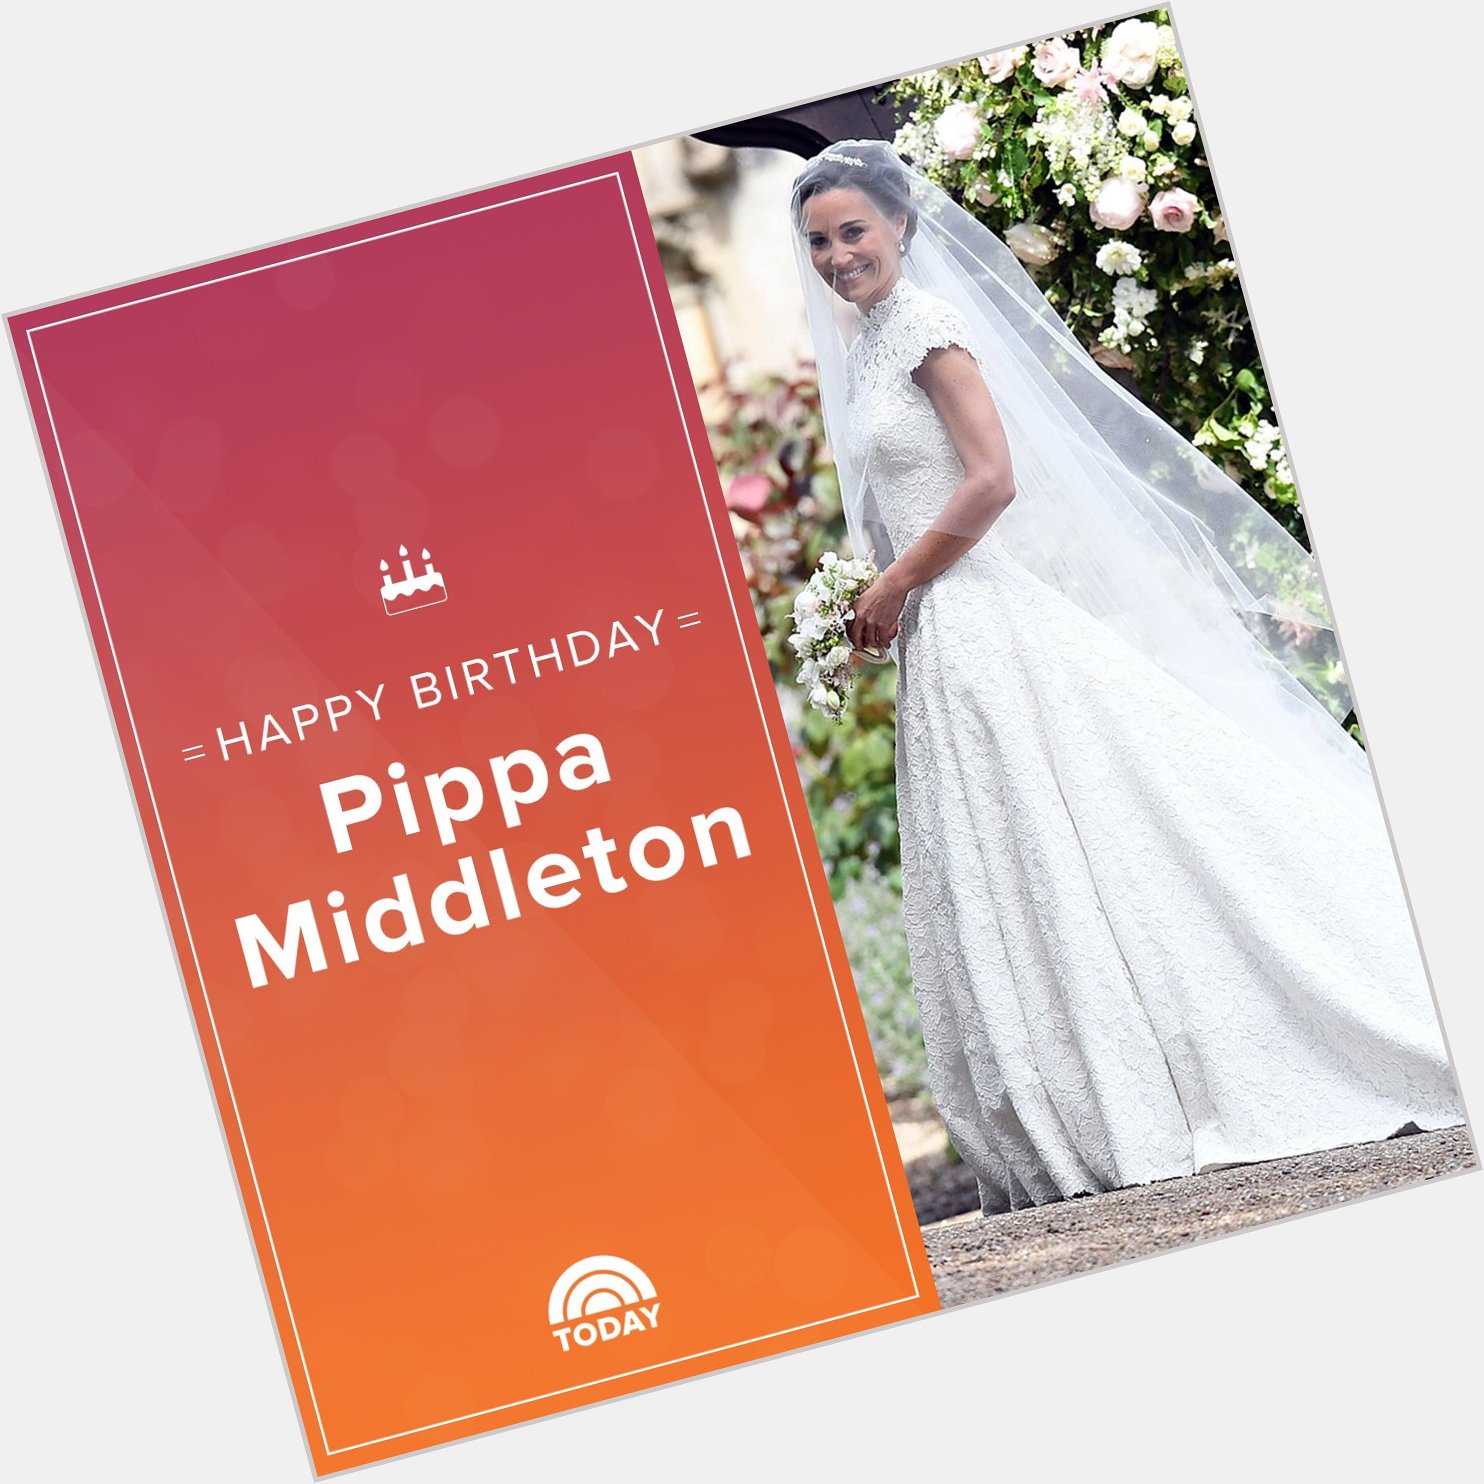 Happy birthday to the lovely Pippa Middleton! 